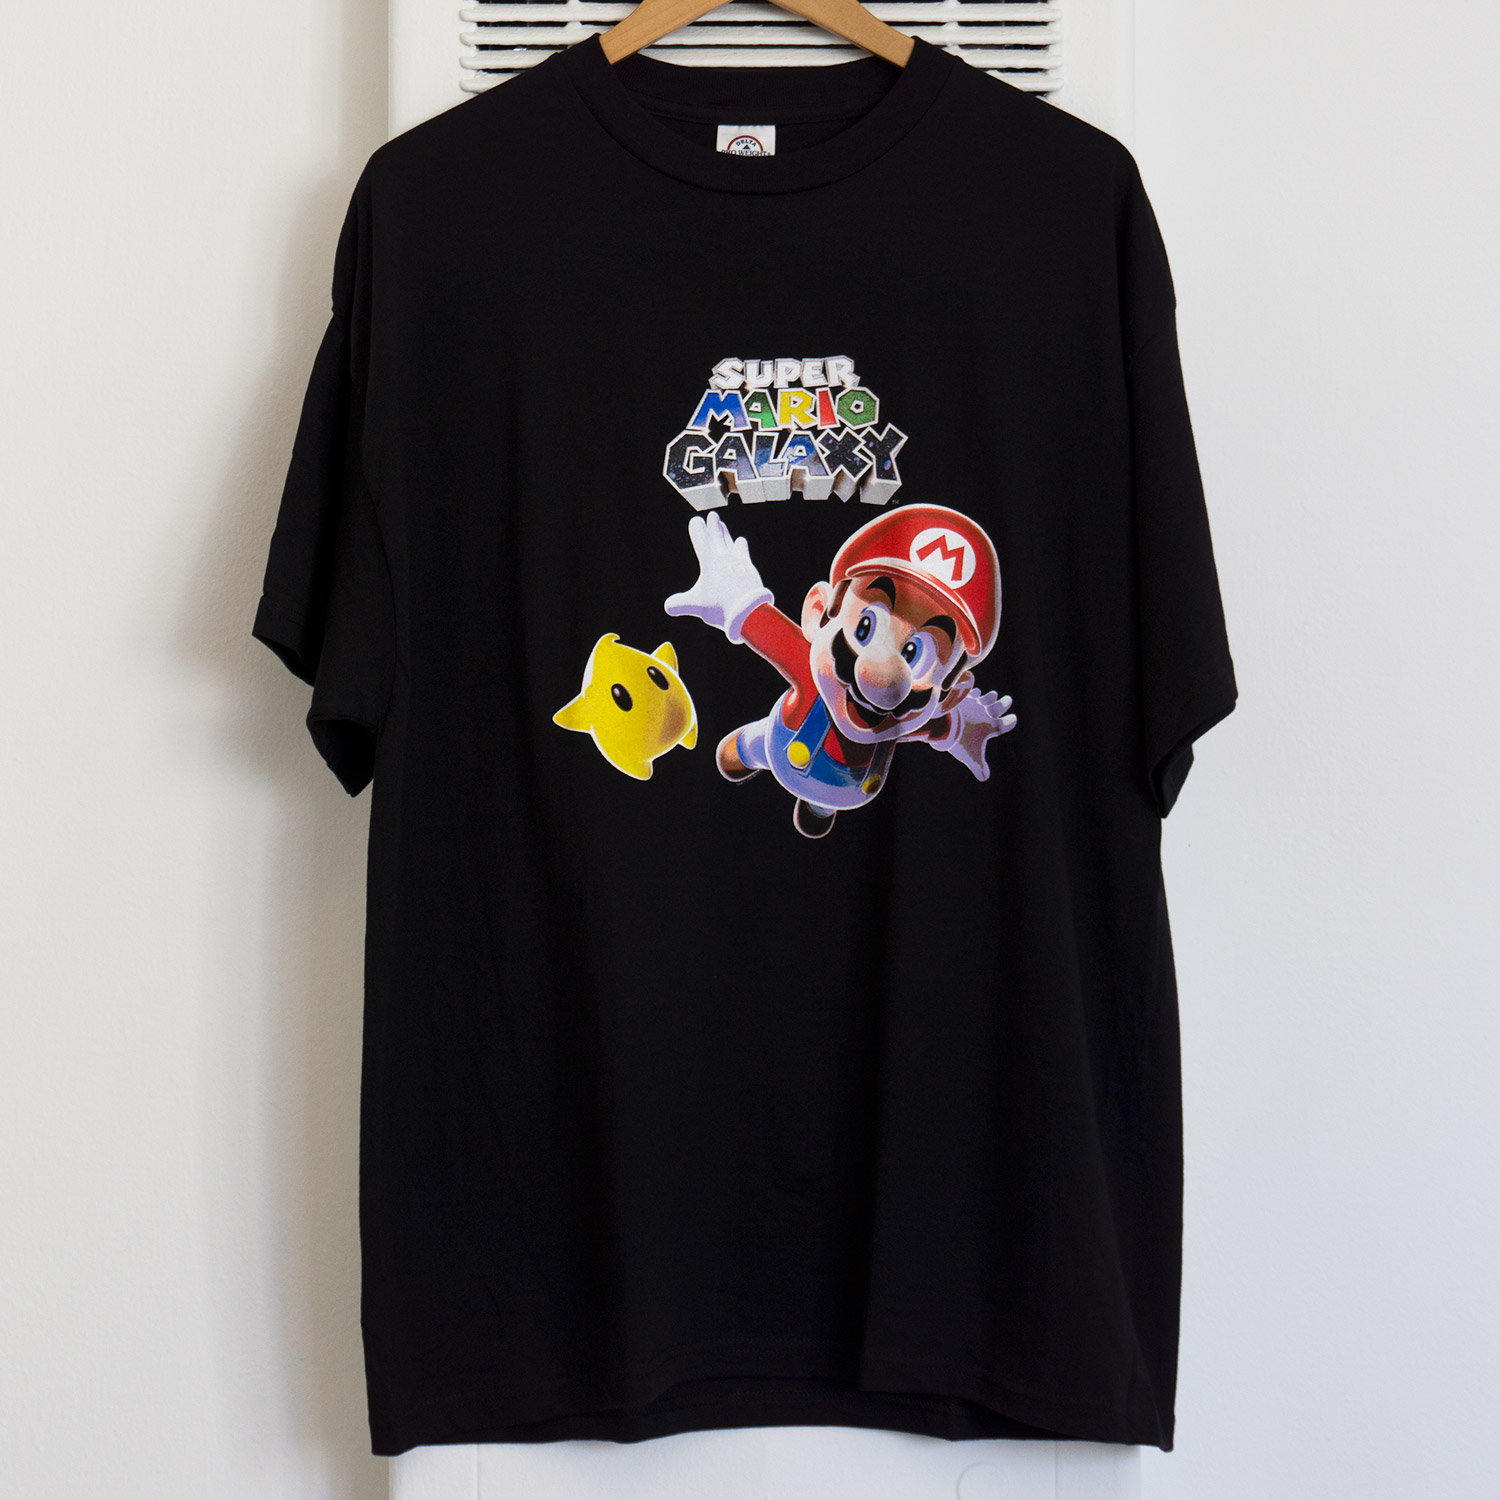 Super Mario Galaxy T-shirt